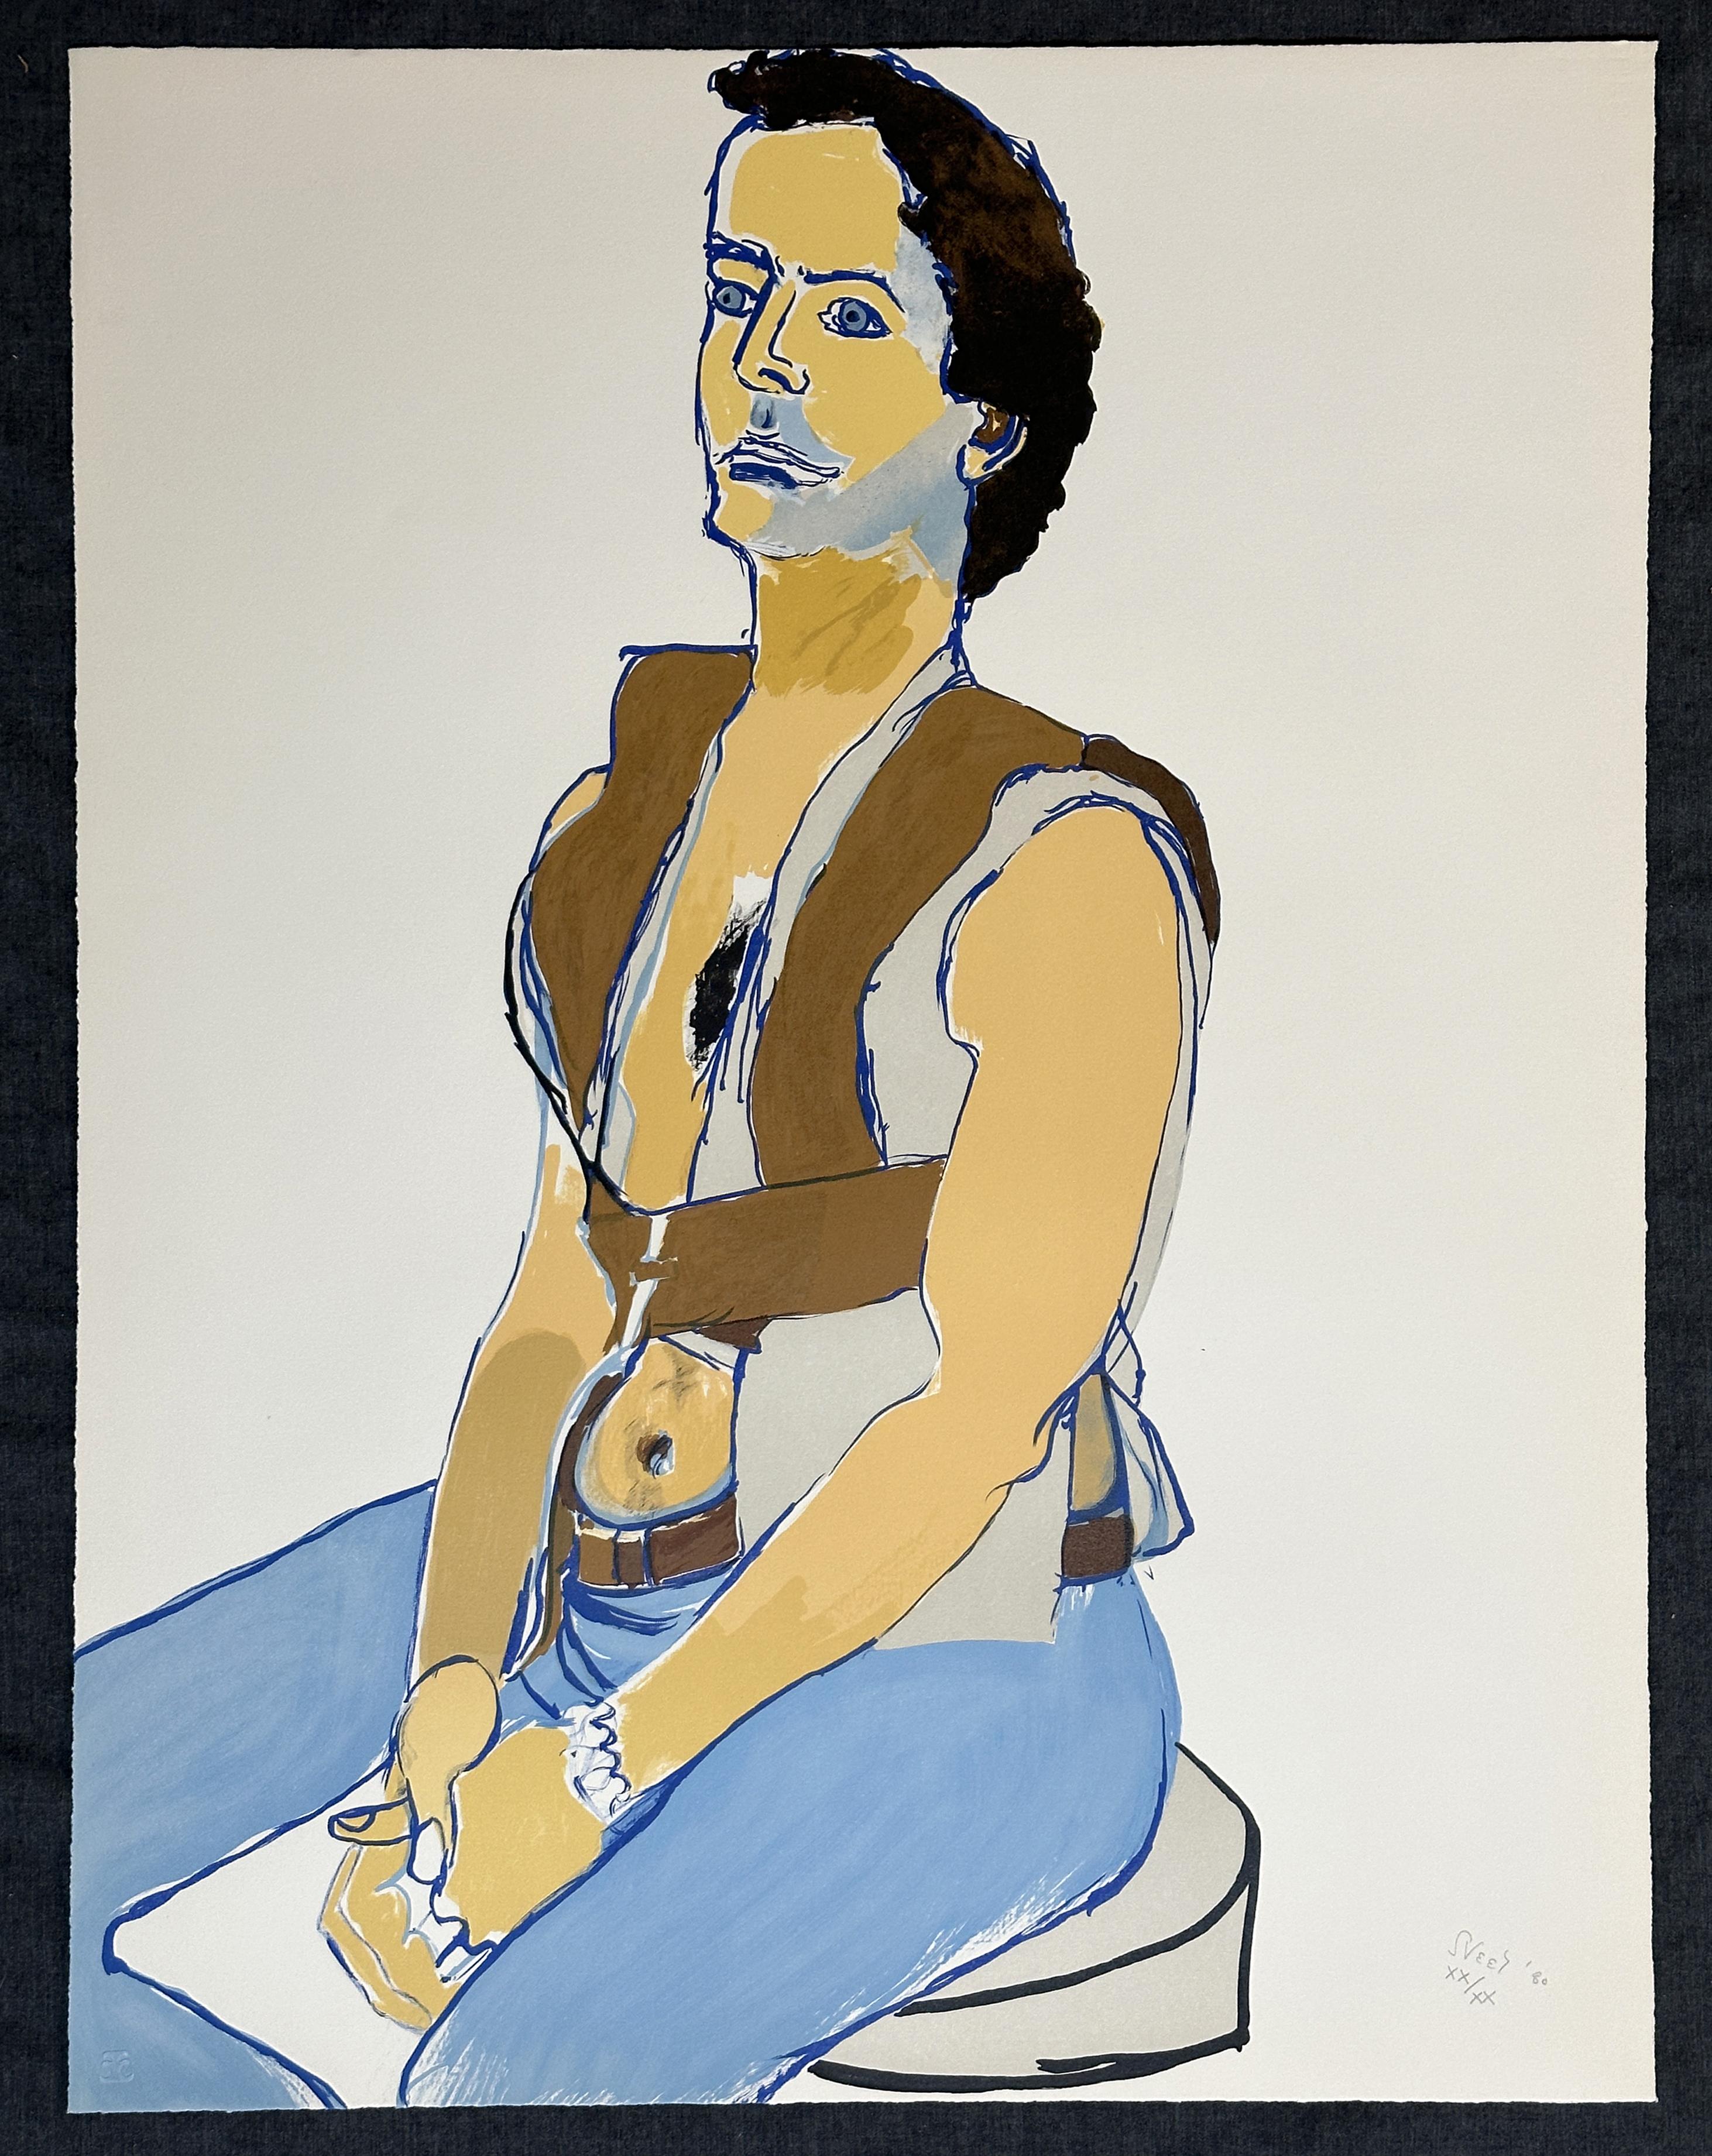 Man in a harness 1980 - Print by Alice Neel